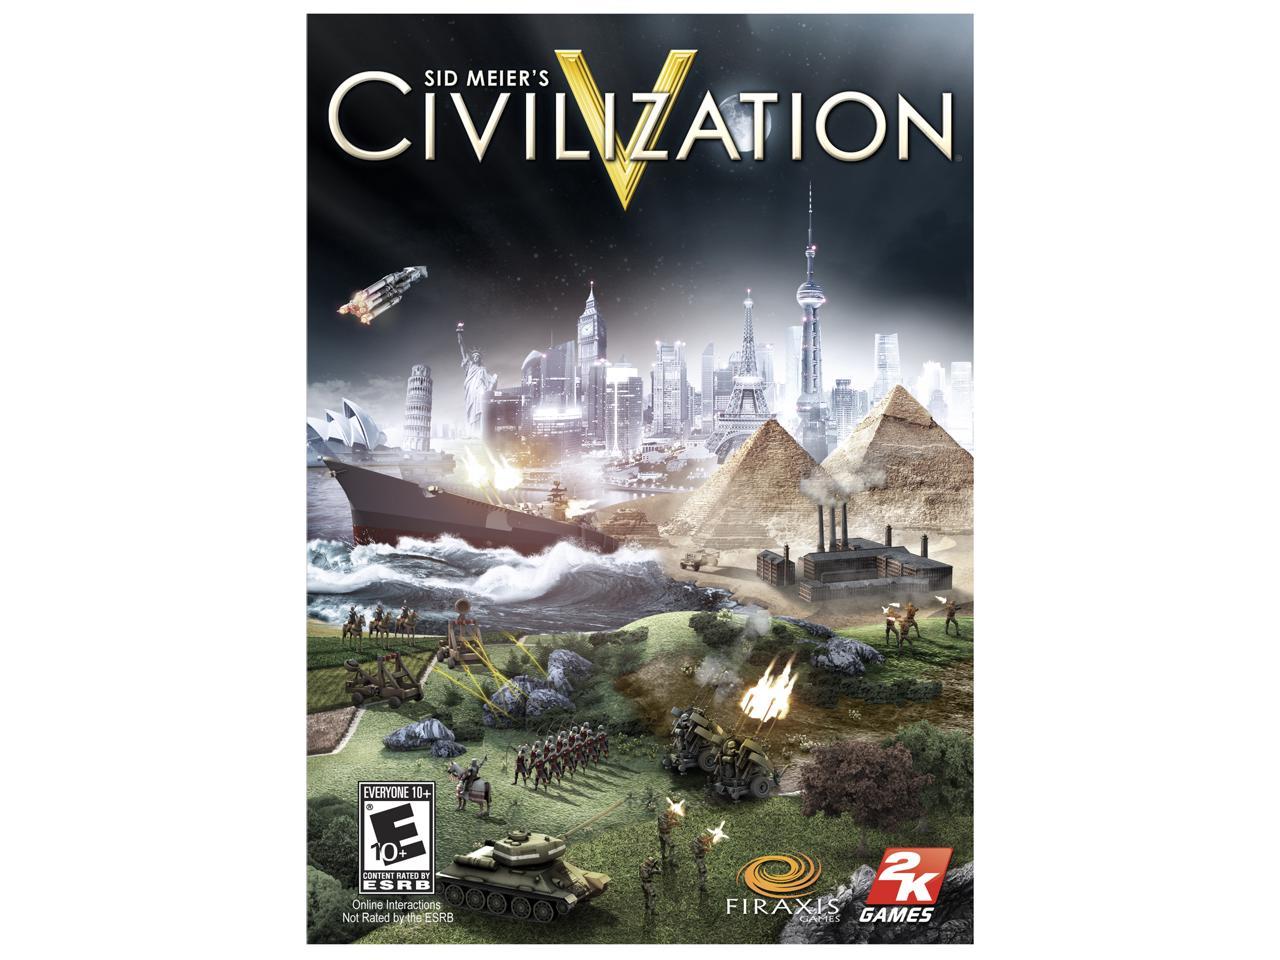 download civilization 5 sdk